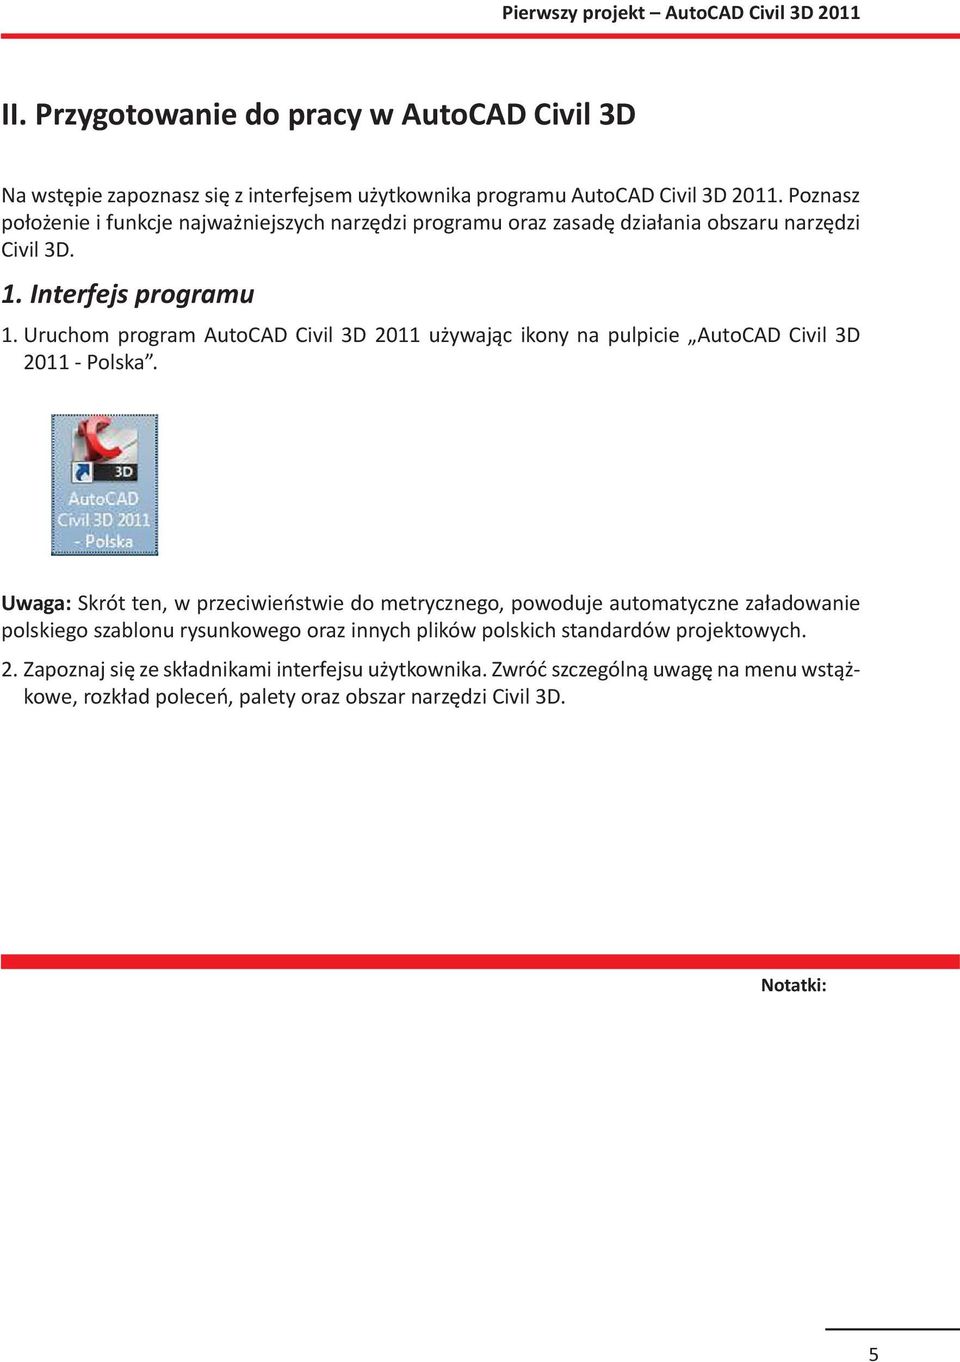 Uruchom program AutoCAD Civil 3D 2011 używając ikony na pulpicie AutoCAD Civil 3D 2011 - Polska.